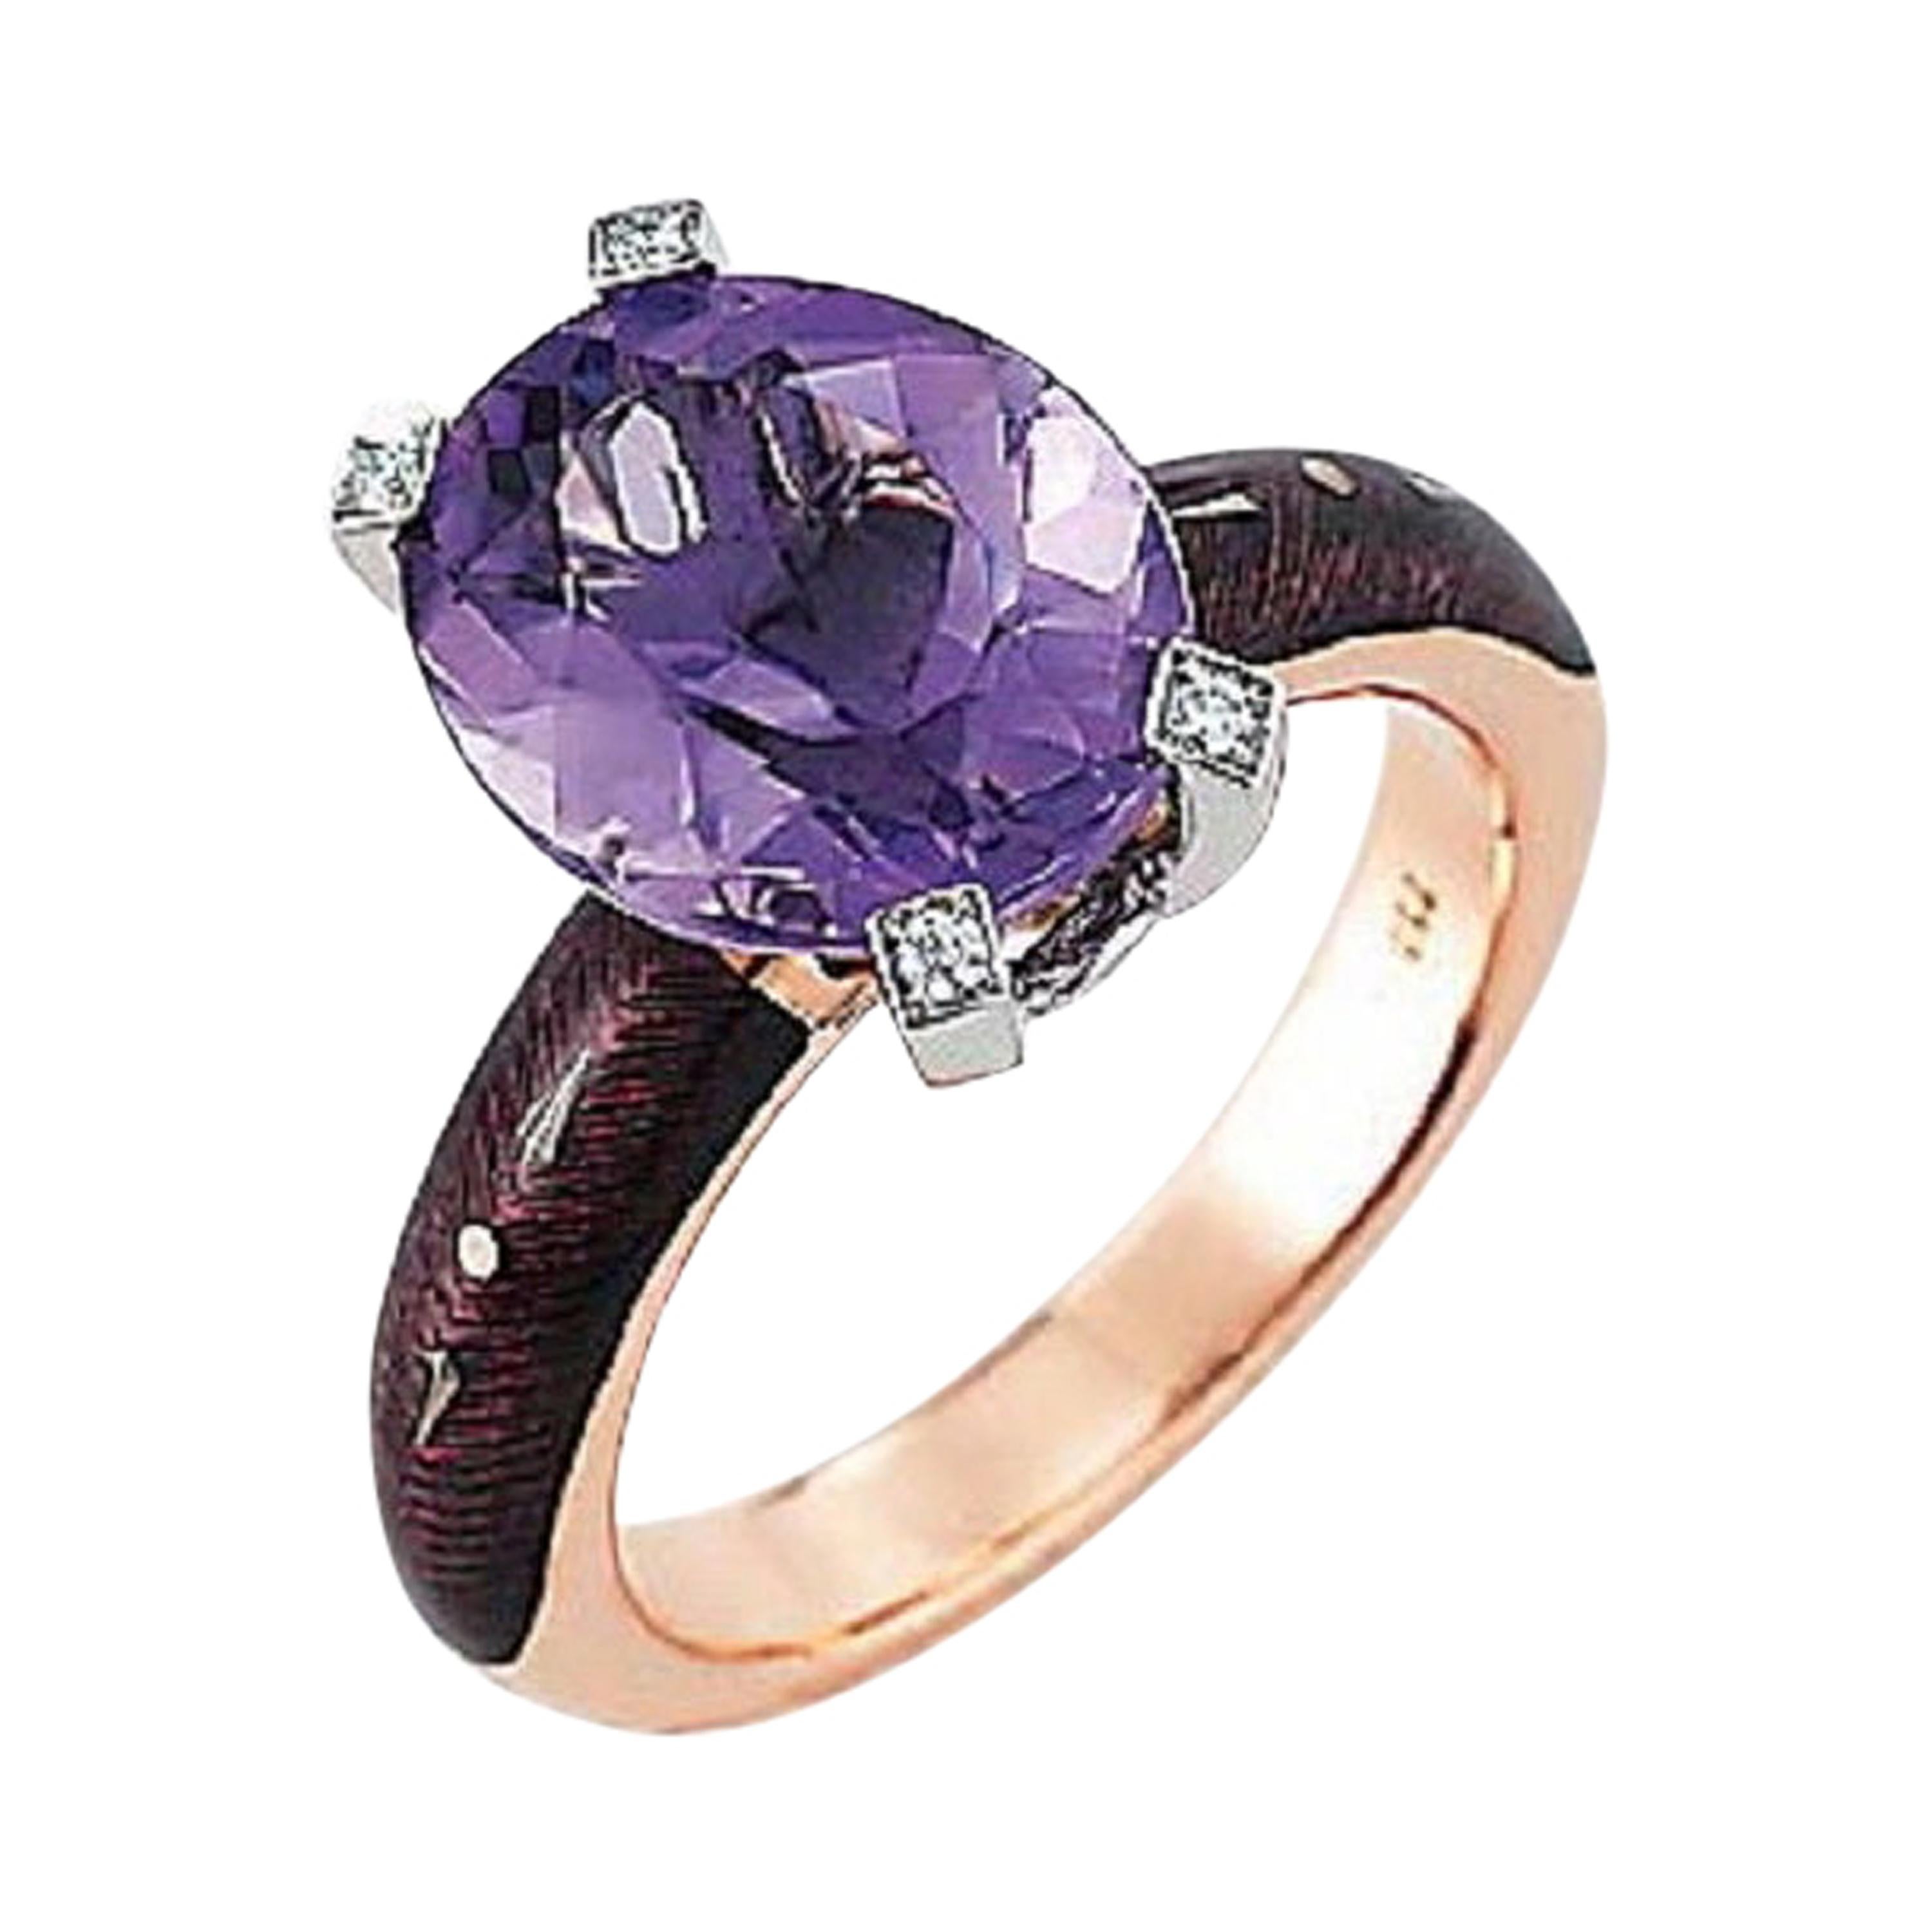 Victor Mayer Cocktail Lilac Enamel Ring 18k Rose / White Gold Amethyst Diamonds